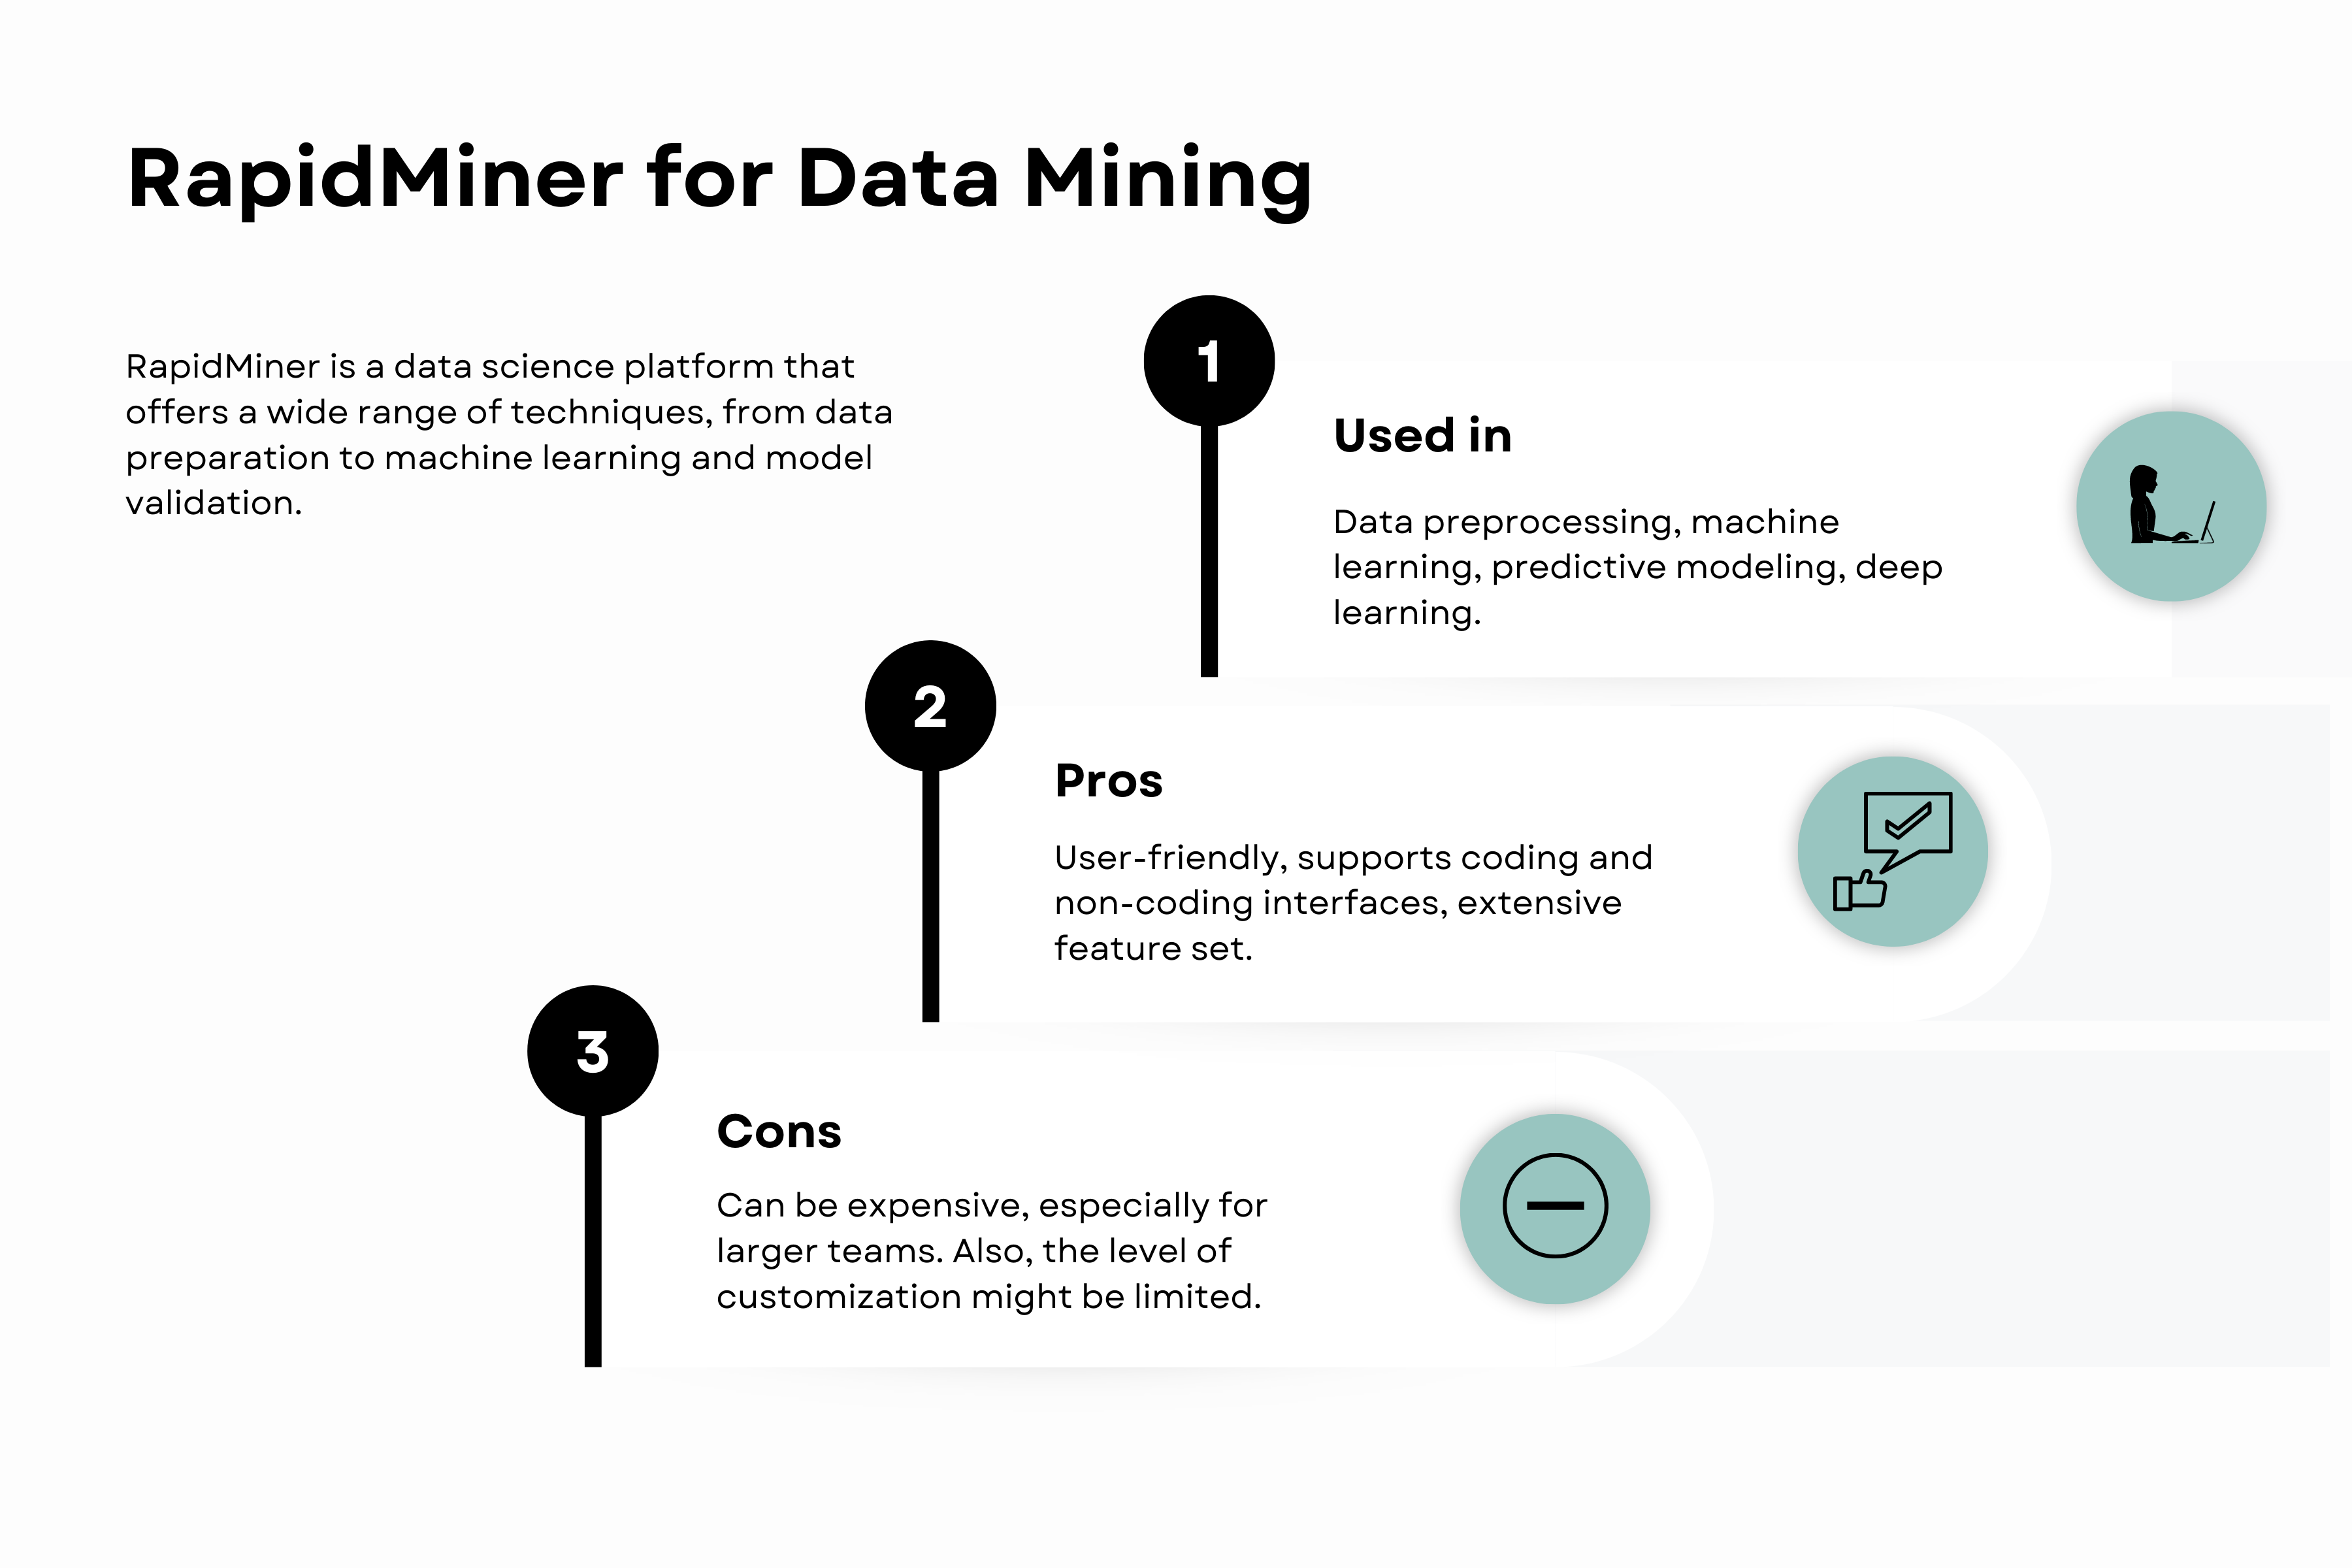 RapidMiner for data mining